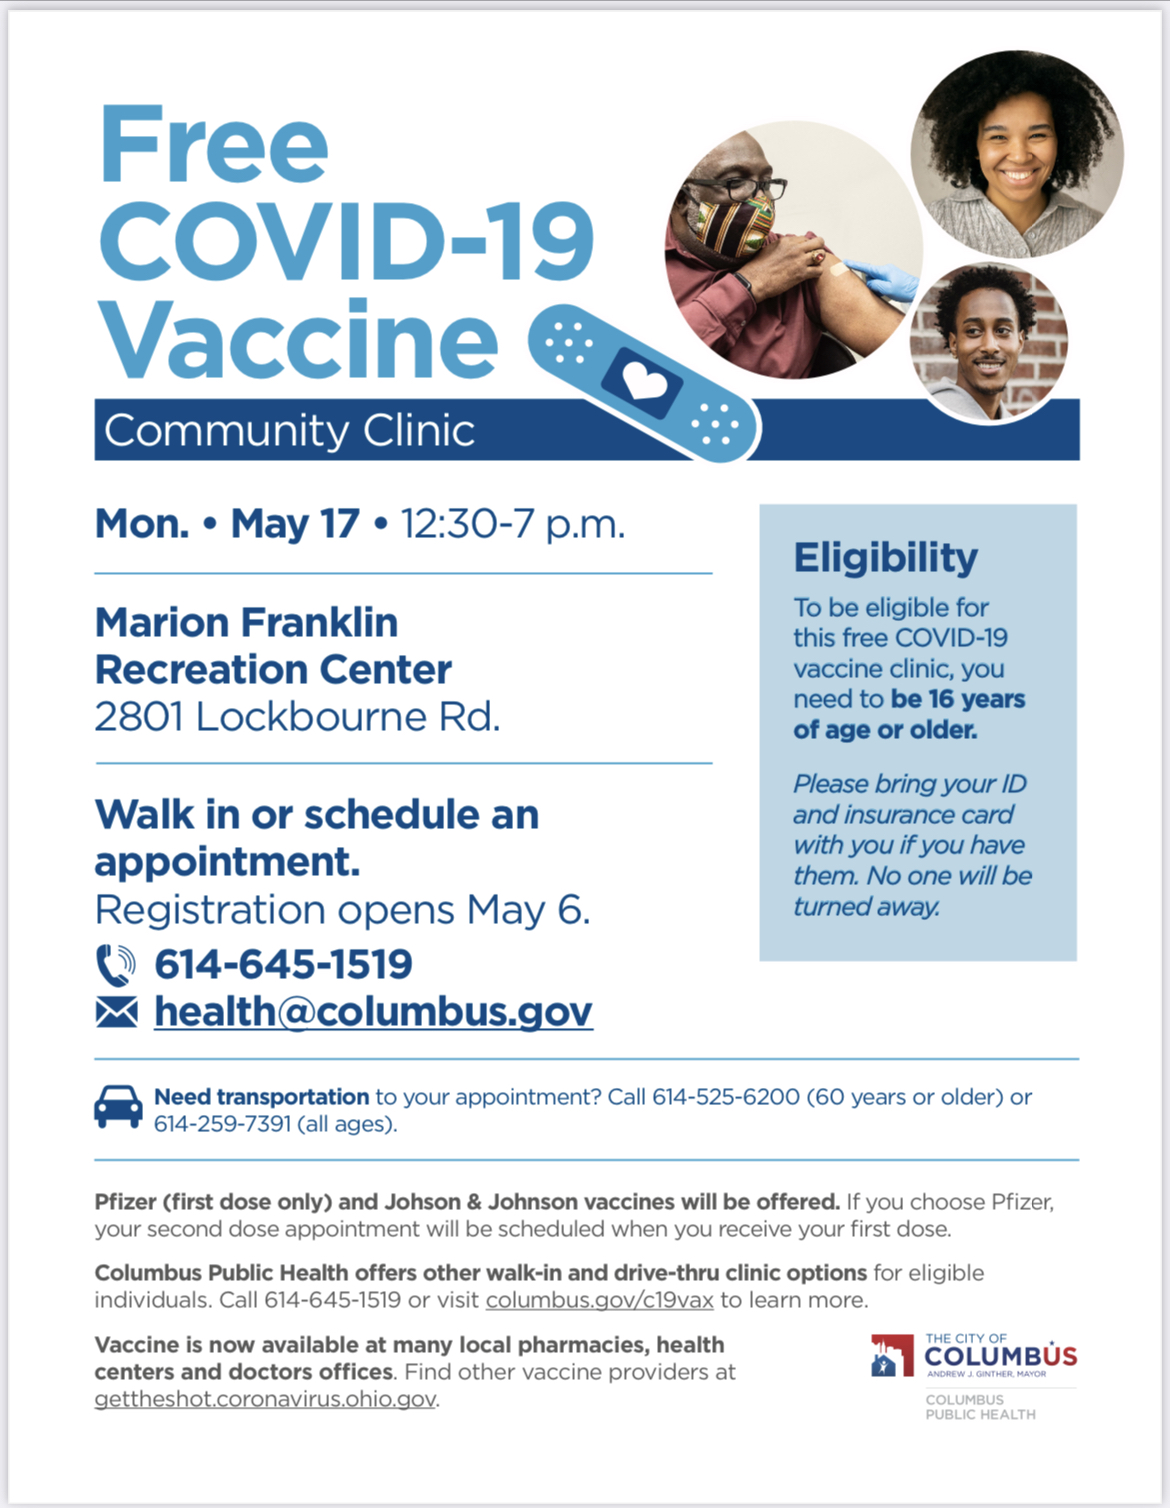 COVID Vaccine Clinics in Far South Columbus